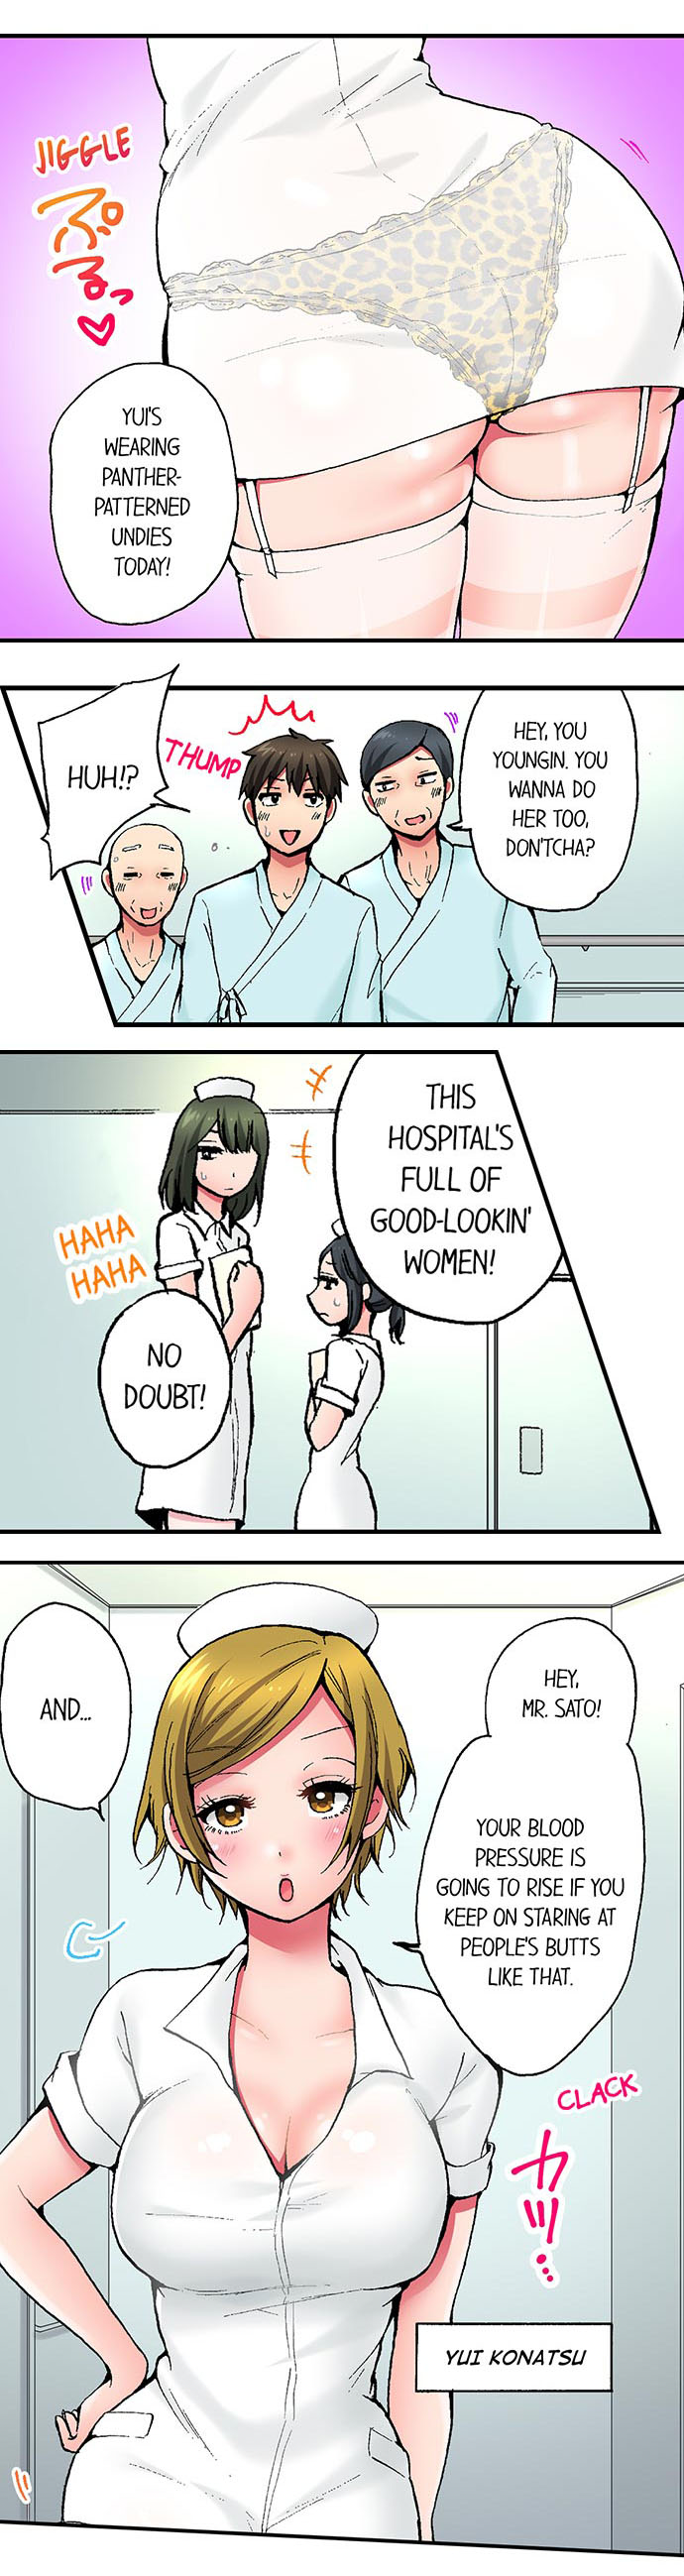 [Yukikuni] Pranking the Working Nurse Ch.4/? [English] [Hentai Universe]